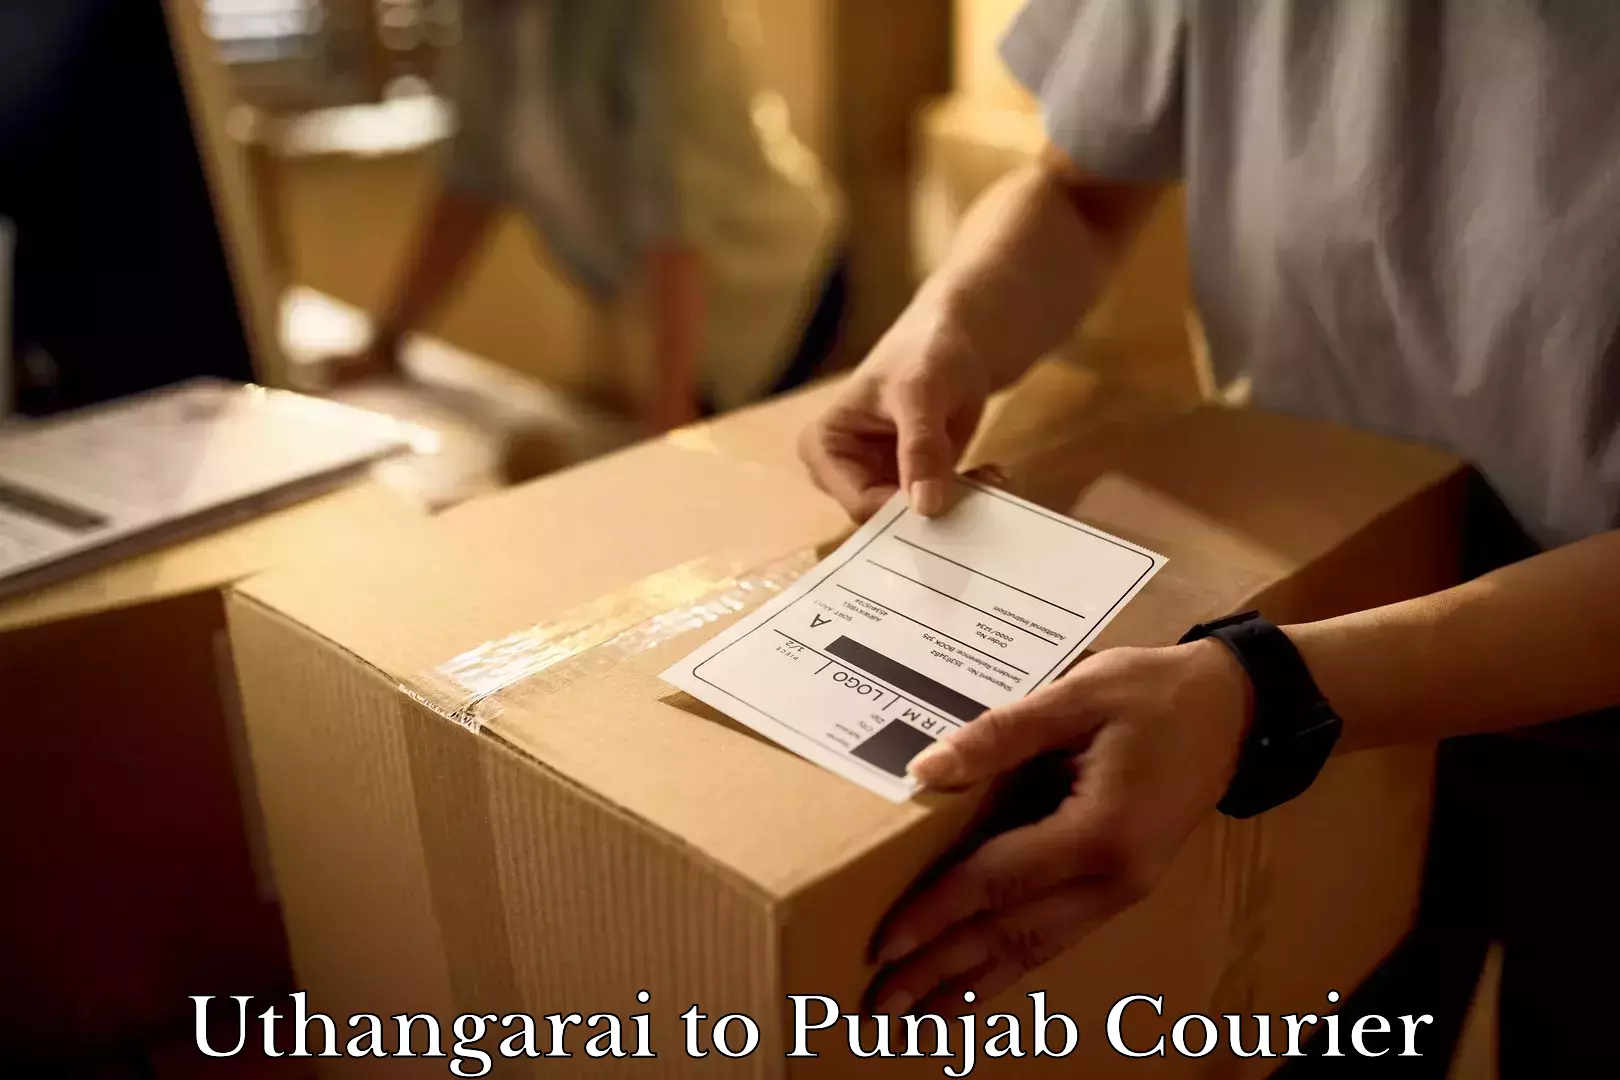 Moving service excellence Uthangarai to Punjab